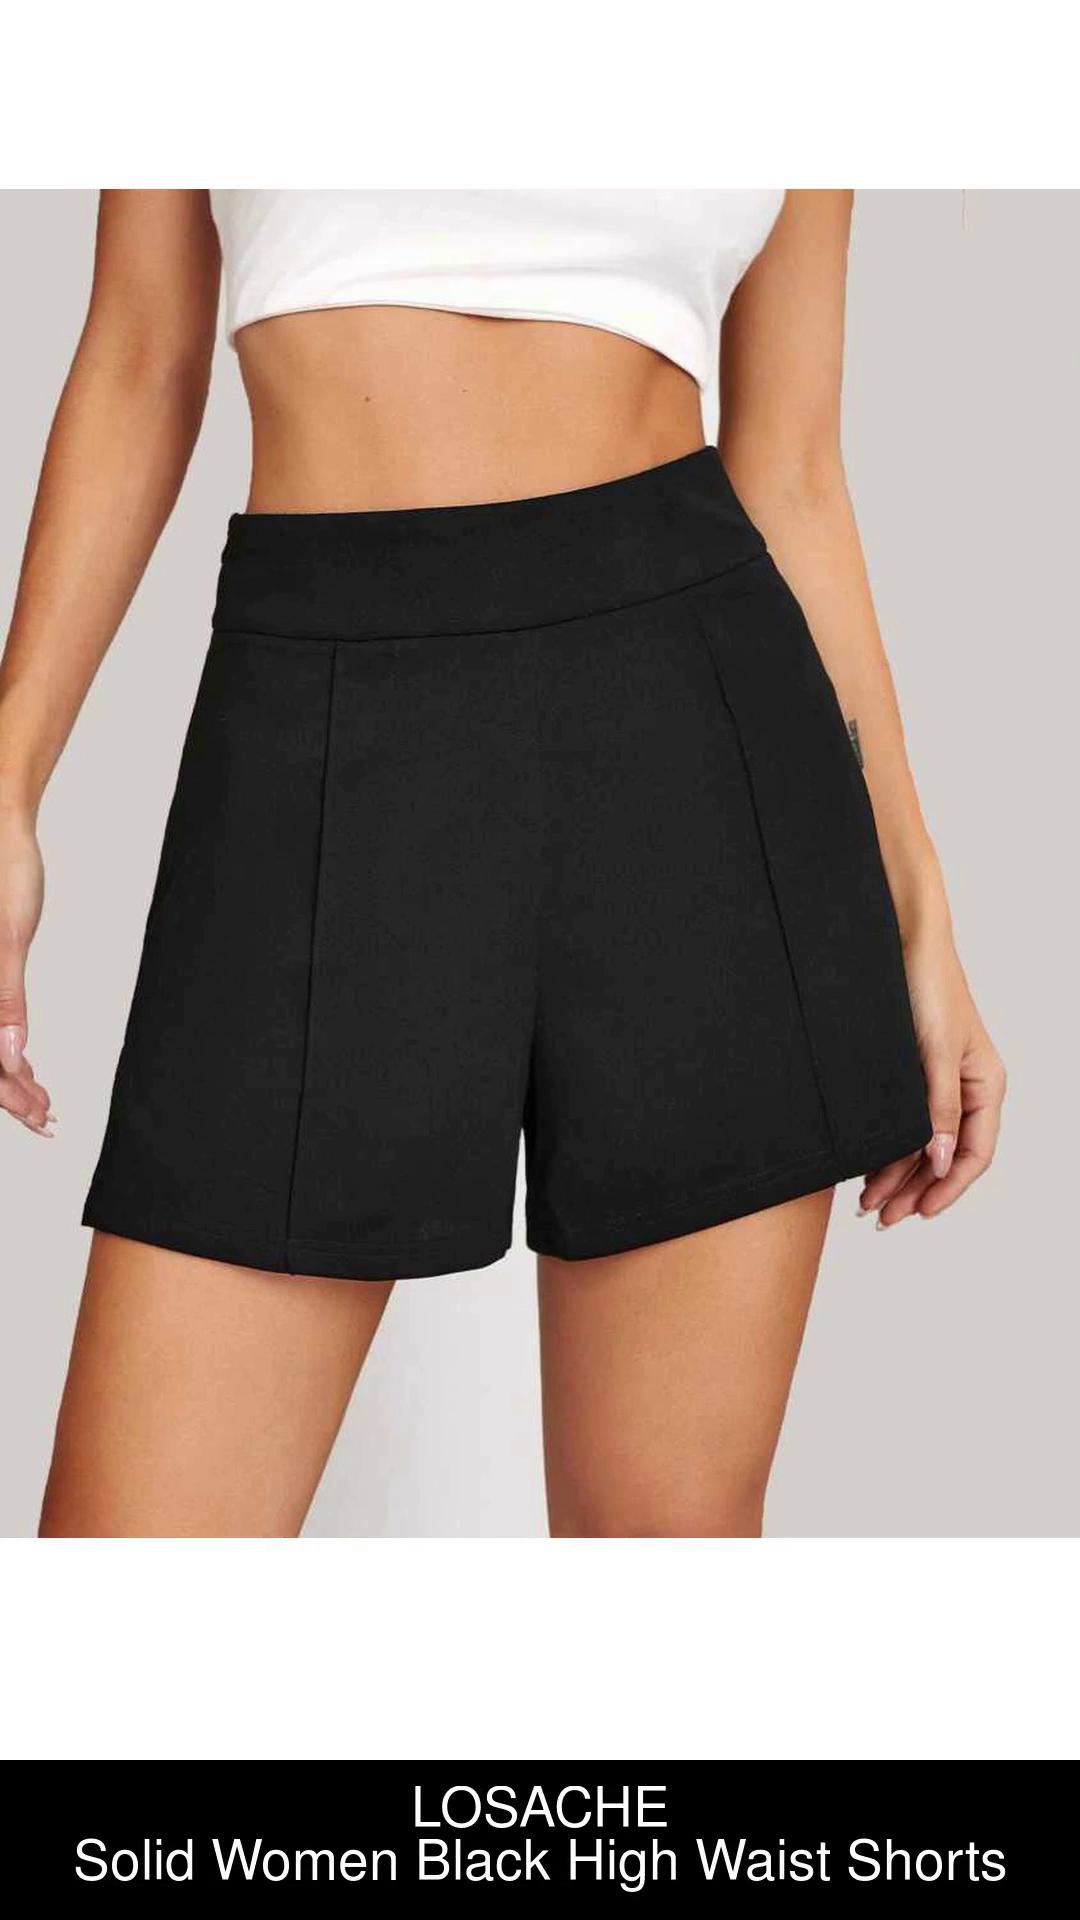 High Waist Shorts - Buy High Waist Shorts online in India